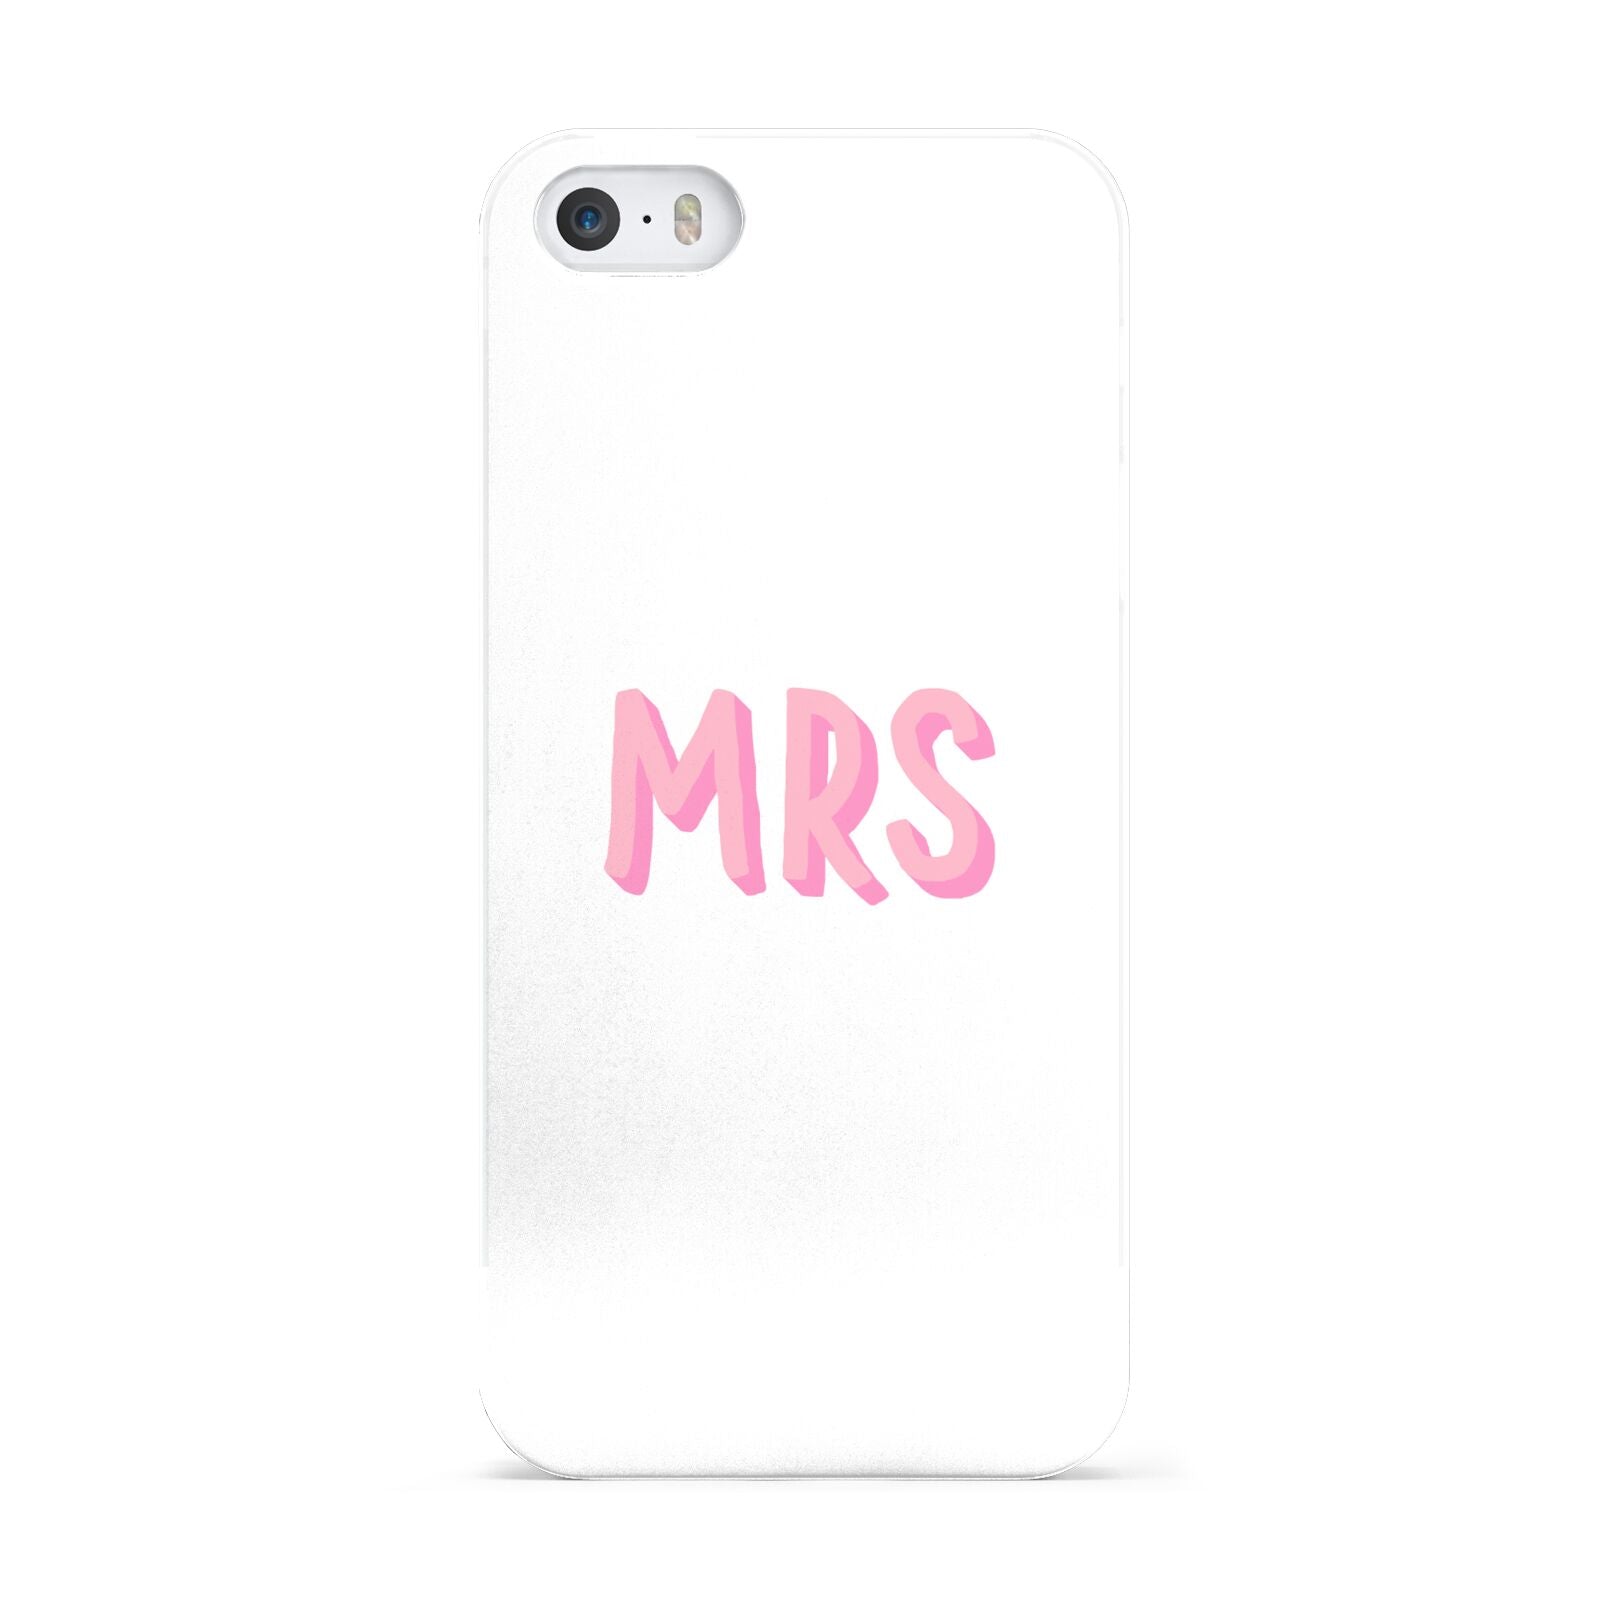 Mrs Apple iPhone 5 Case